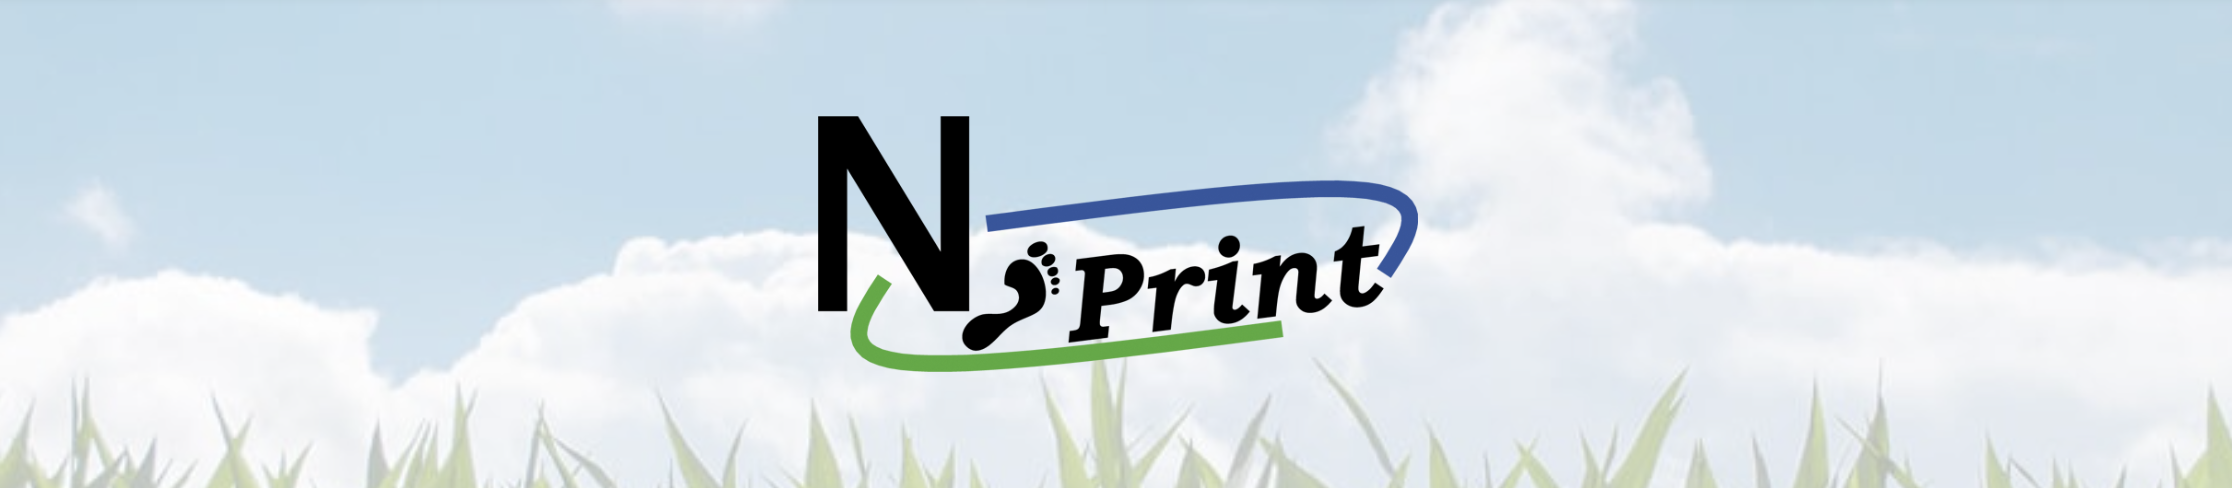 N Print Logo Natural background